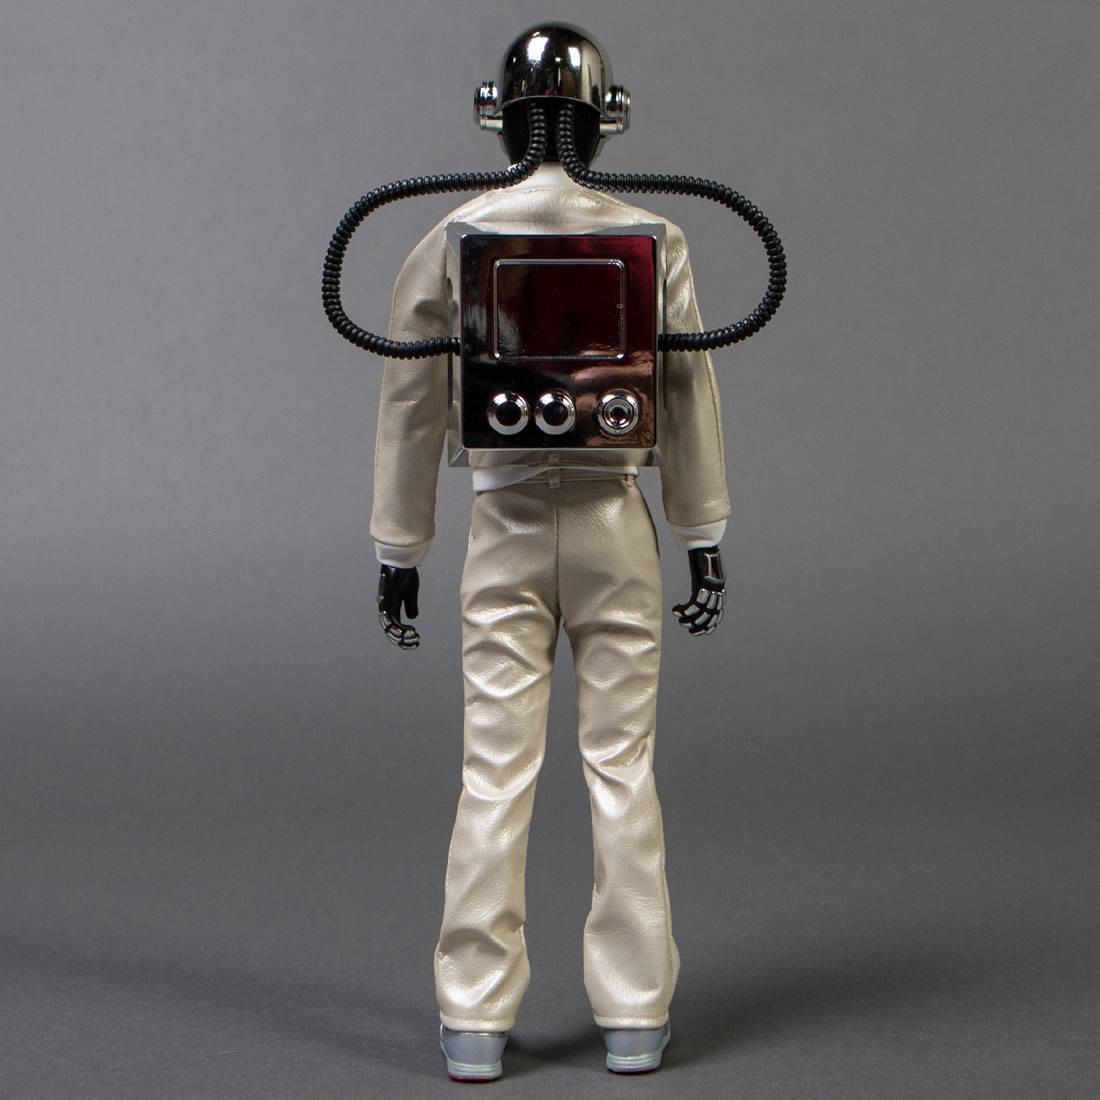 Medicom RAH Daft Punk Discovery Ver. 2.0 - Thomas Bangalter Figure 